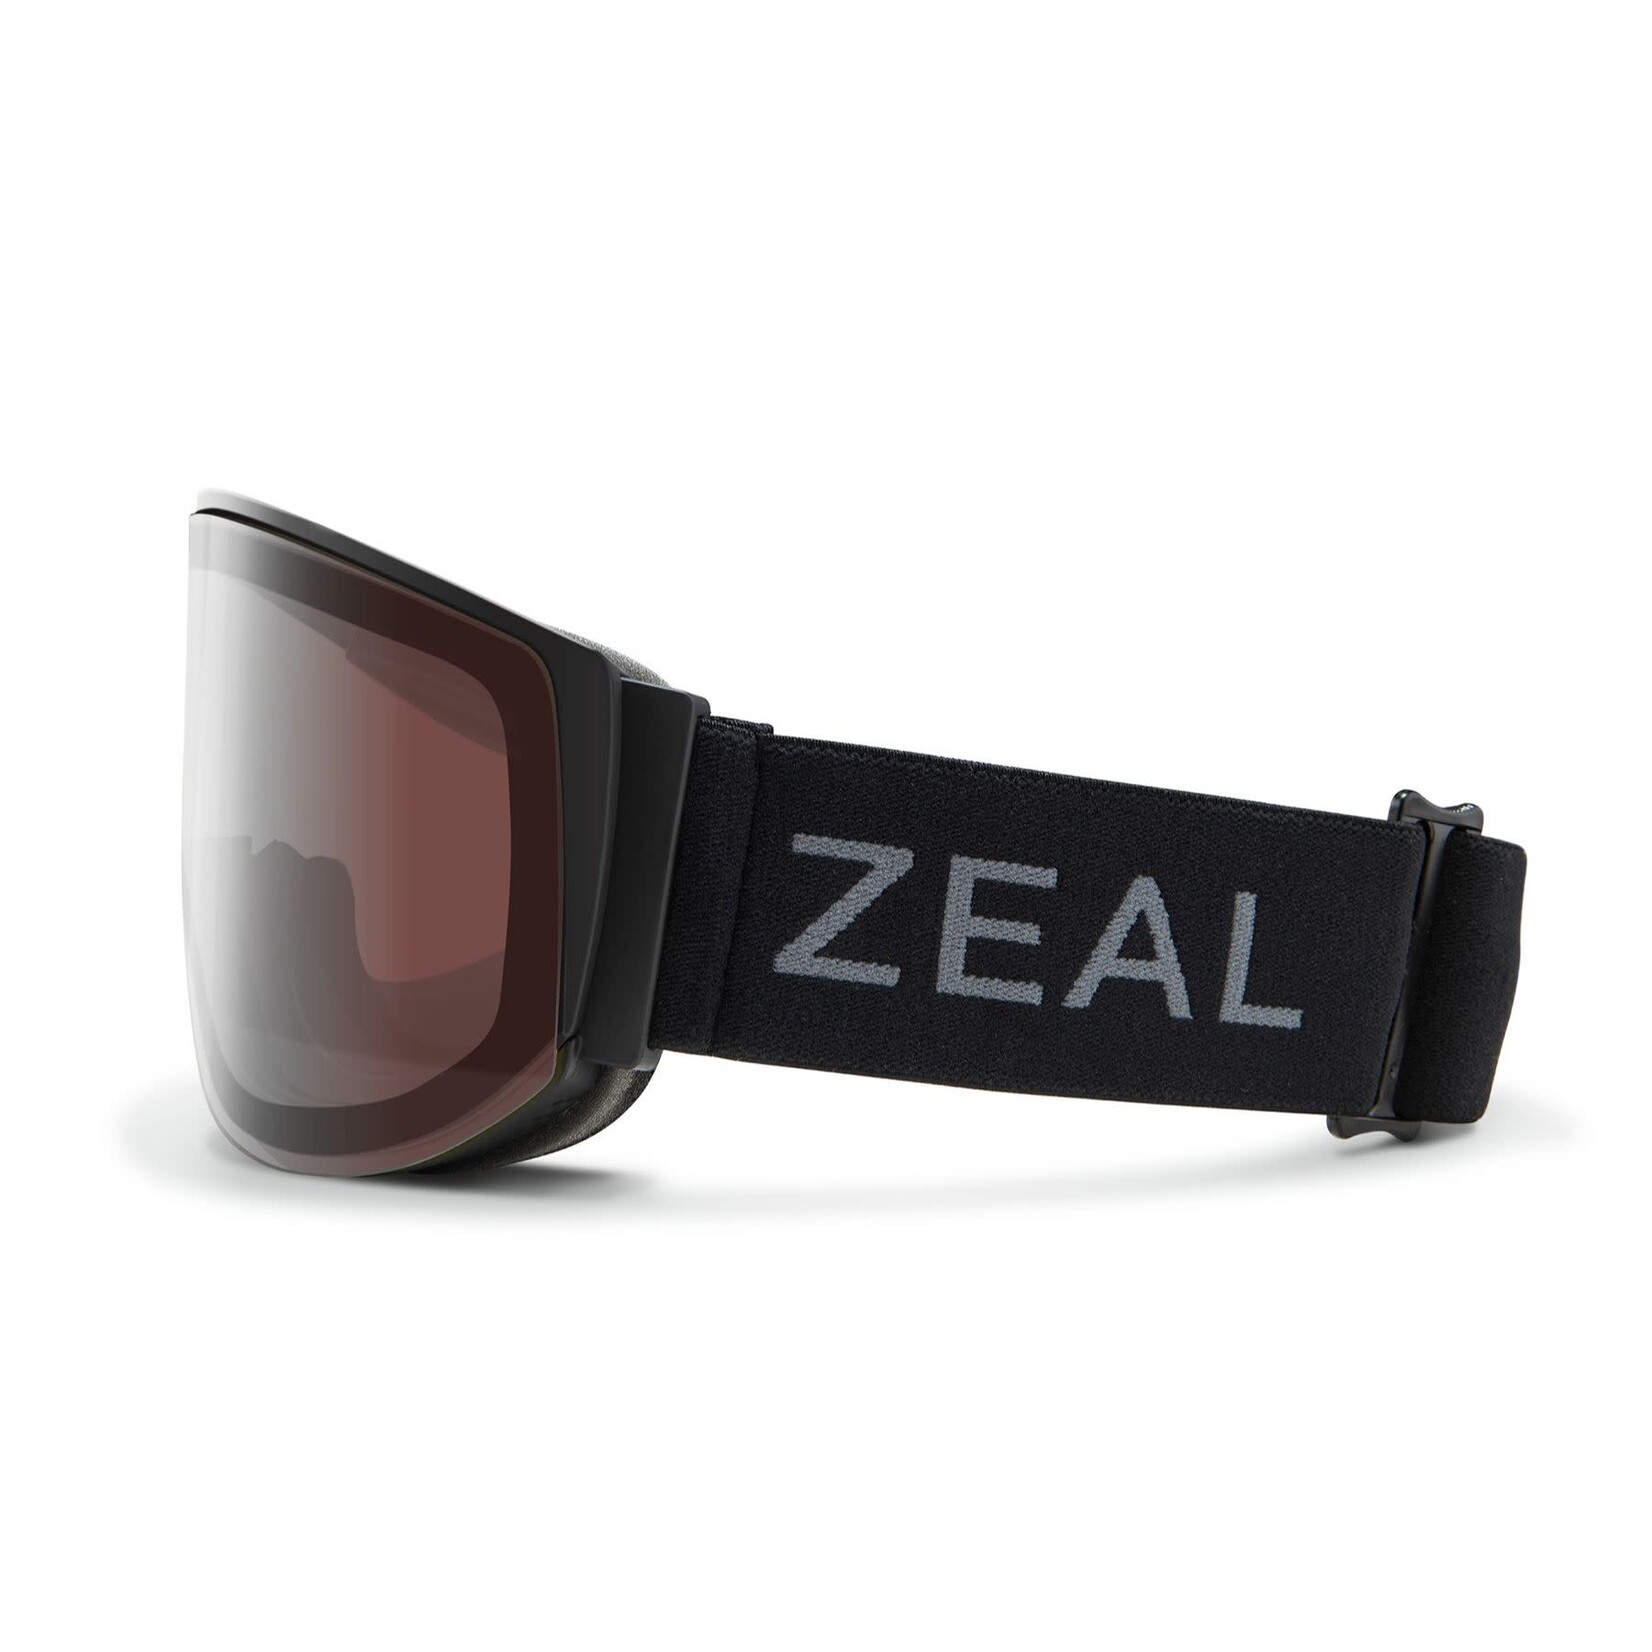 Zeal 2024 Zeal Beacon Goggles - Dark Night/Automatic + GB